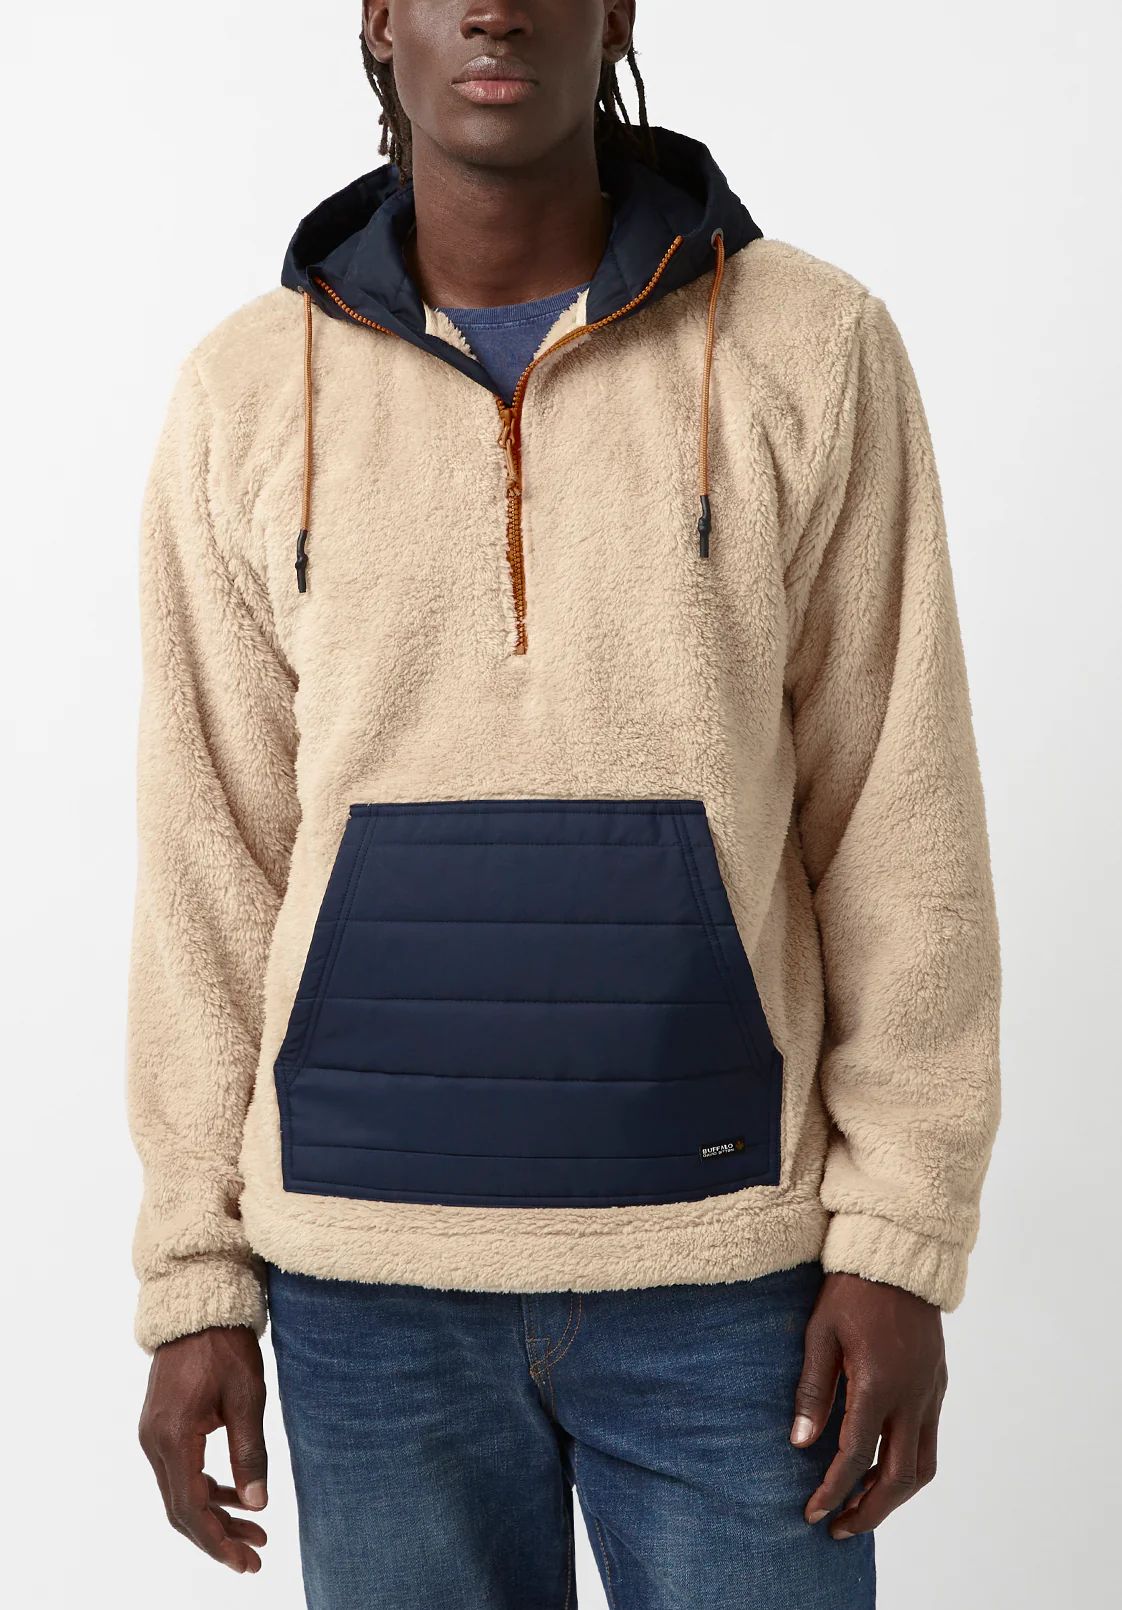 Fibet Men’s Hoodie Sweater Jacket in Beige & Navy Combo - BM24072 | Buffalo David Bitton